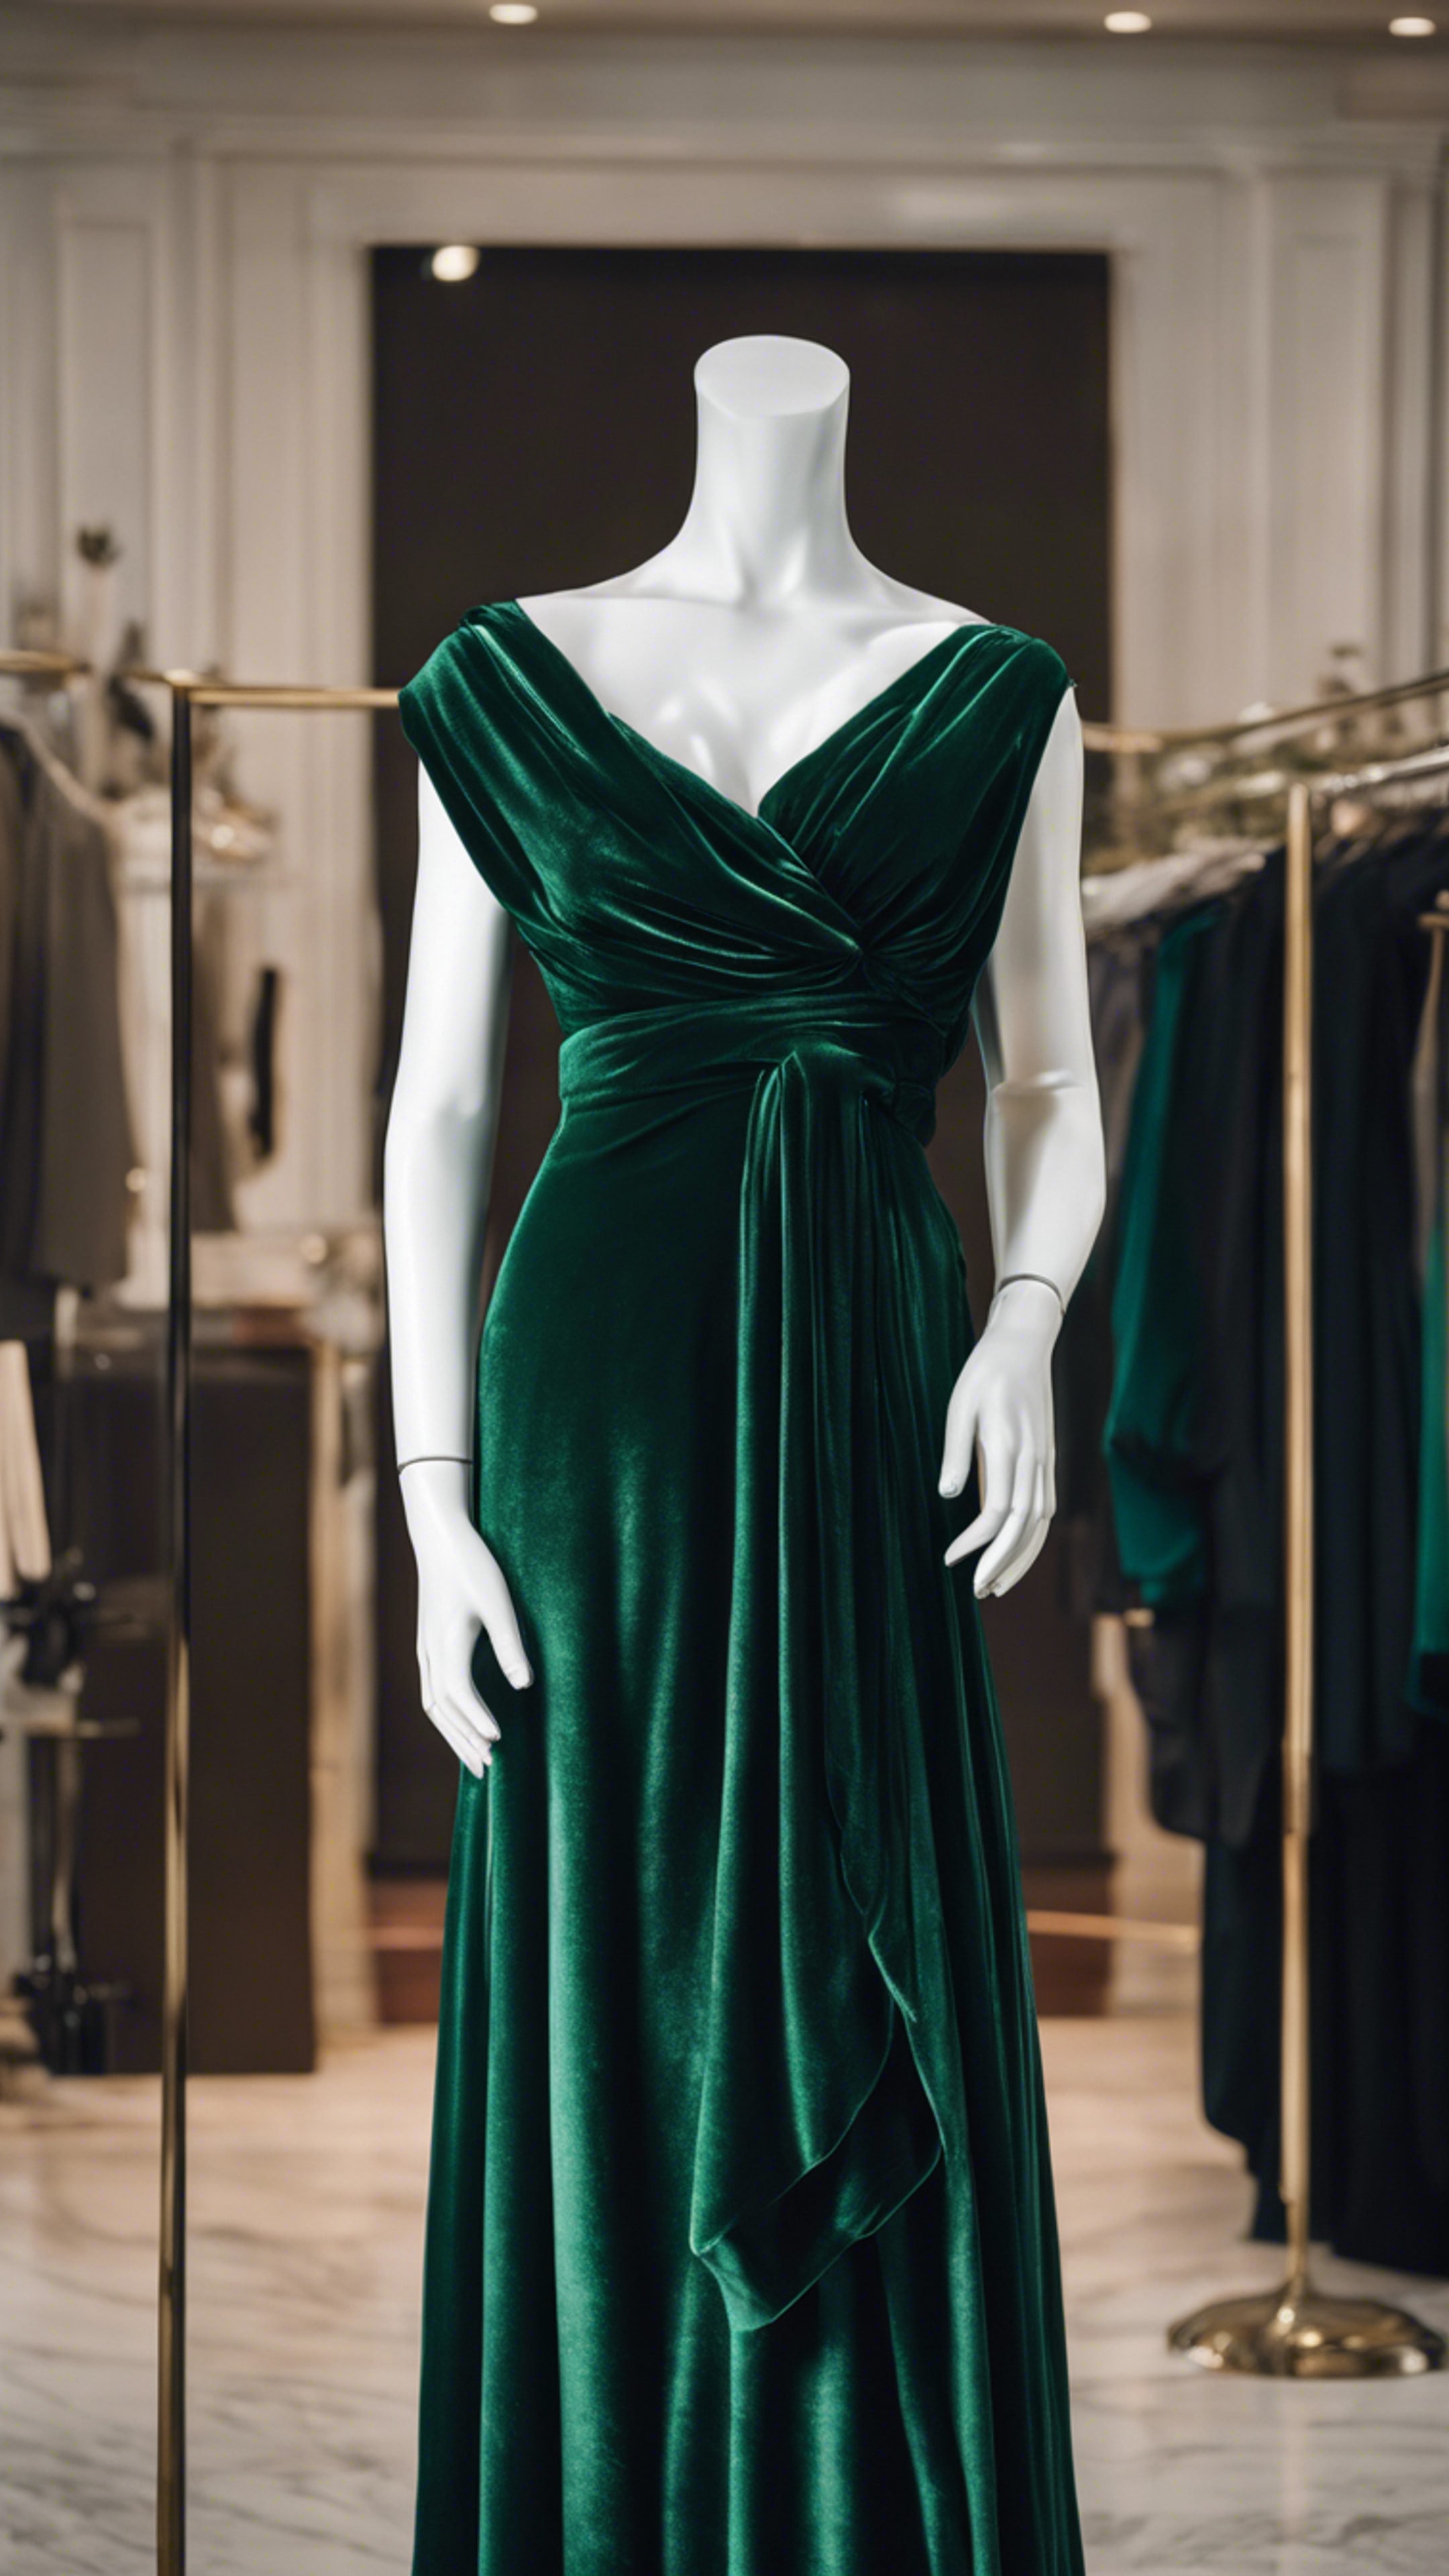 A classy dark green velvet dress draped on a mannequin.壁紙[4958bfaa75d040bb9909]